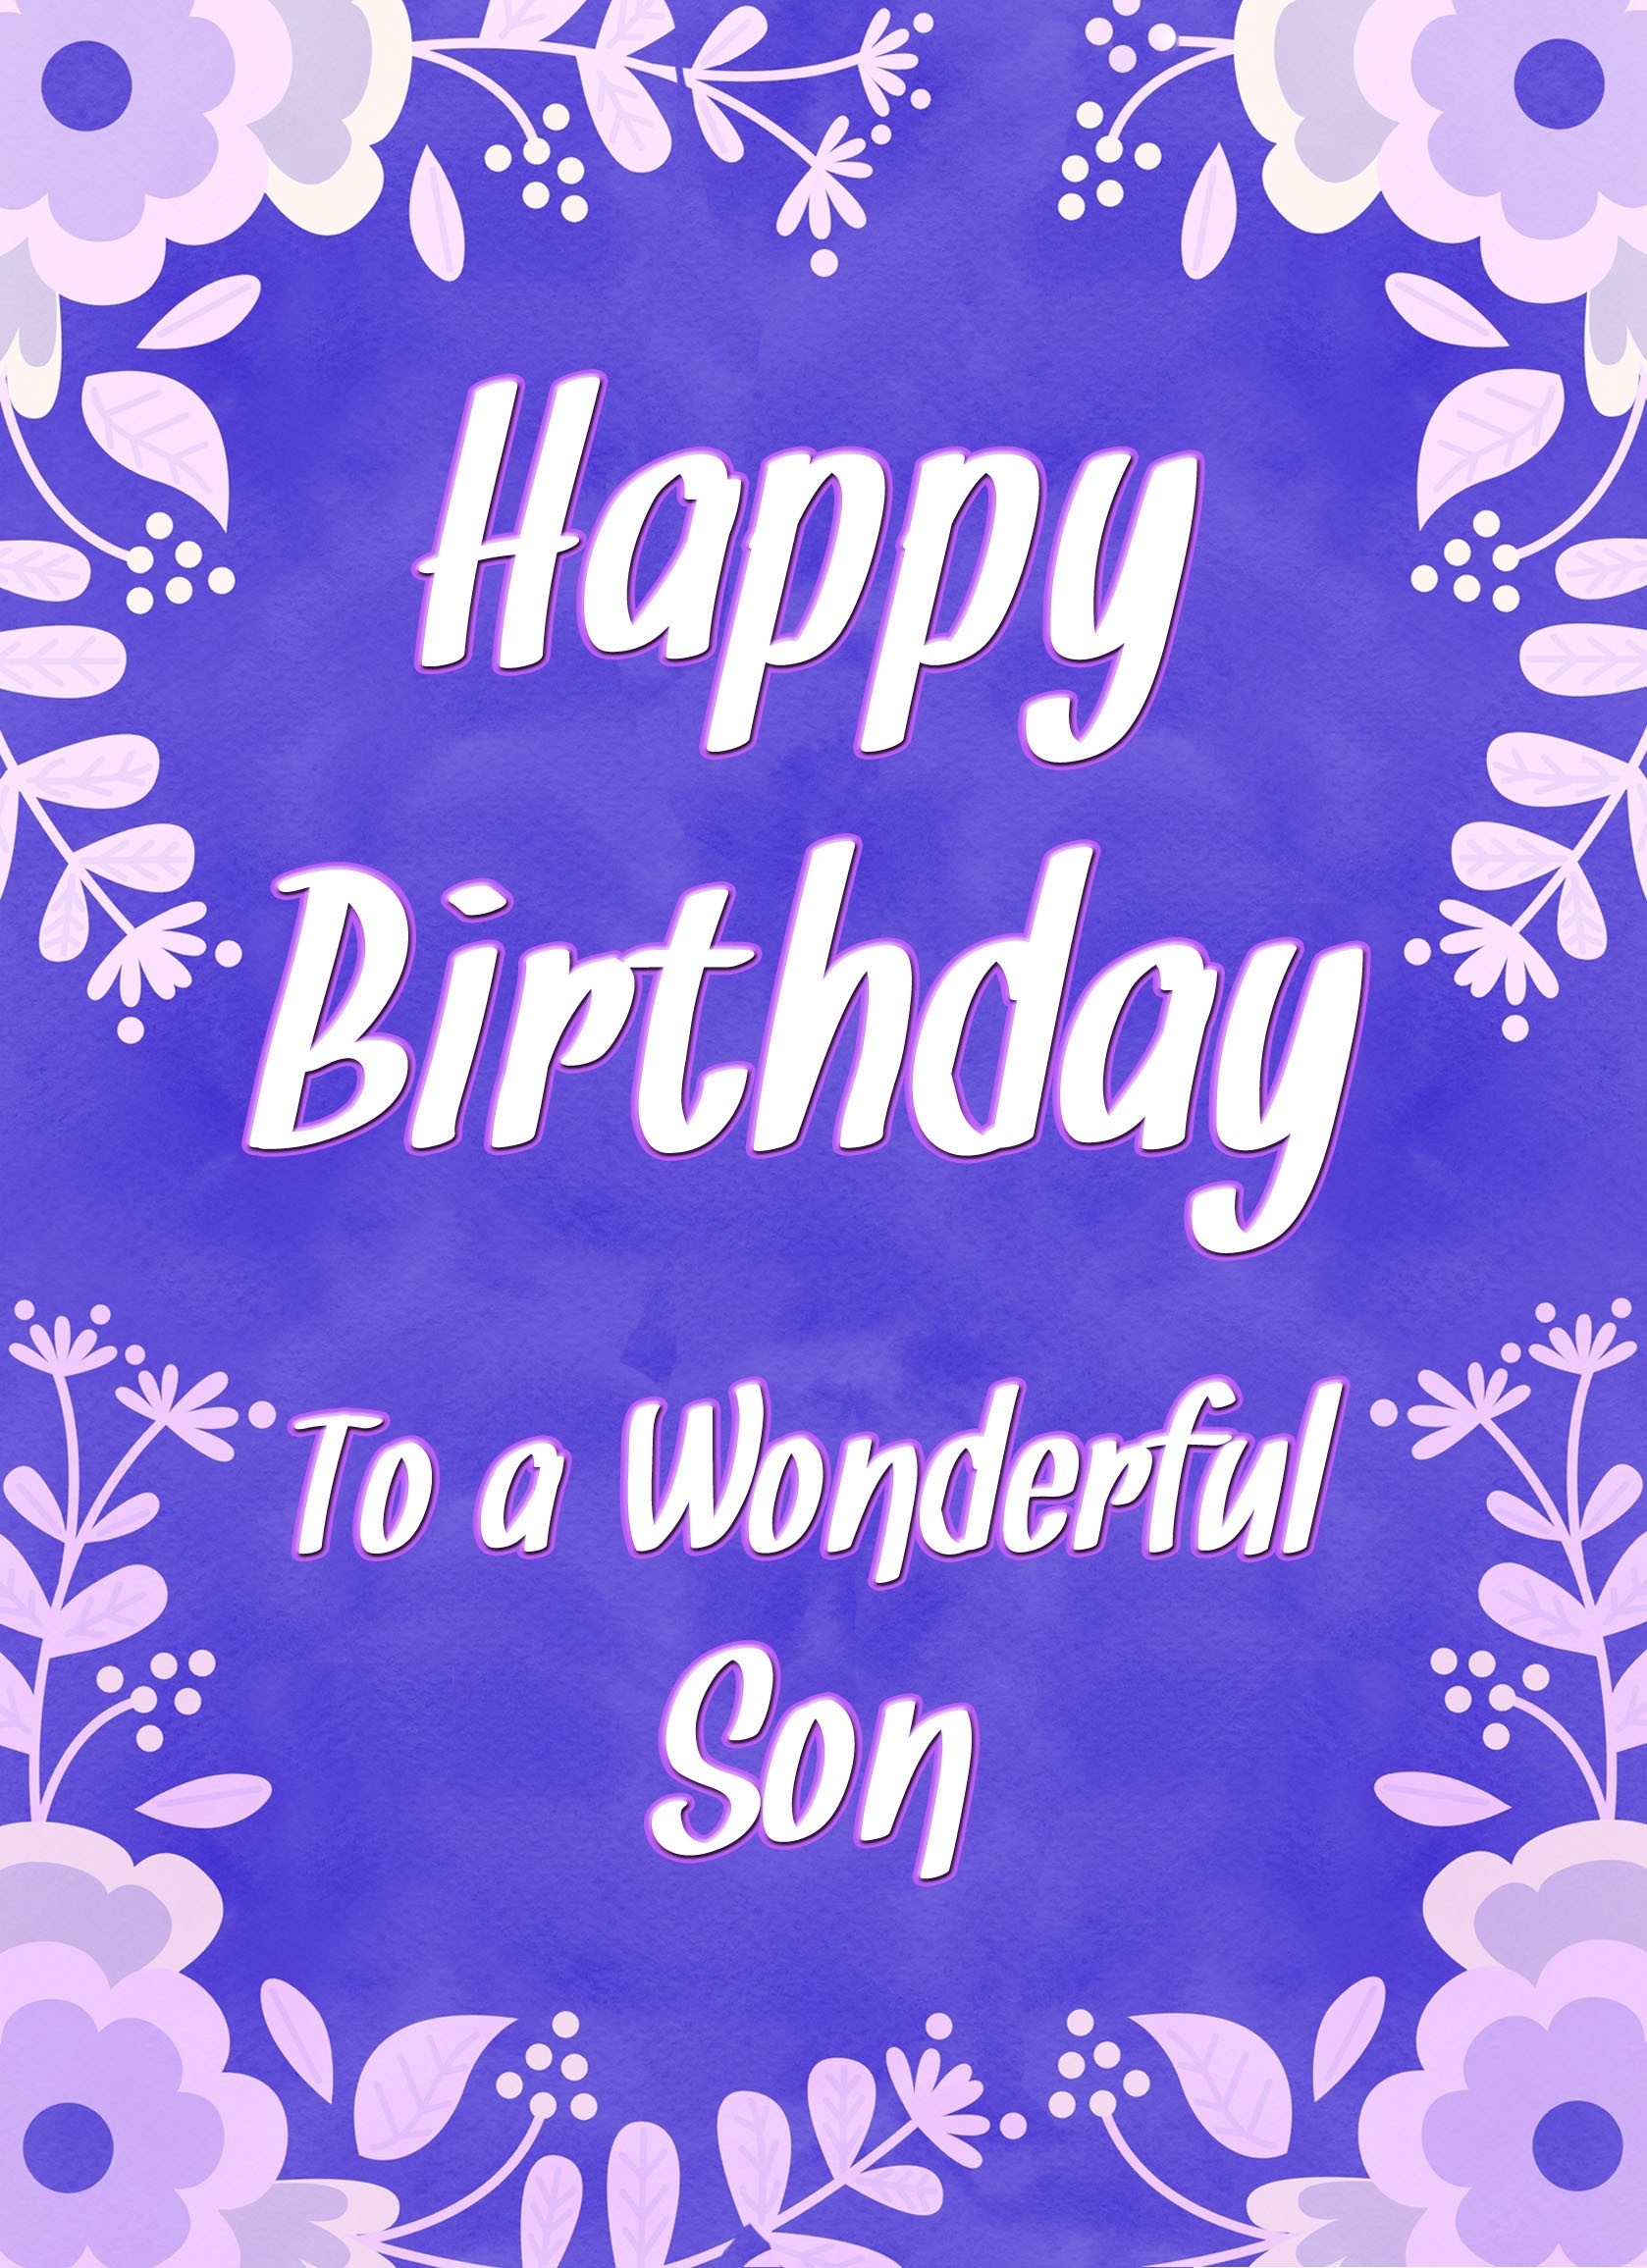 Birthday Card For Wonderful Son (Purple Border)